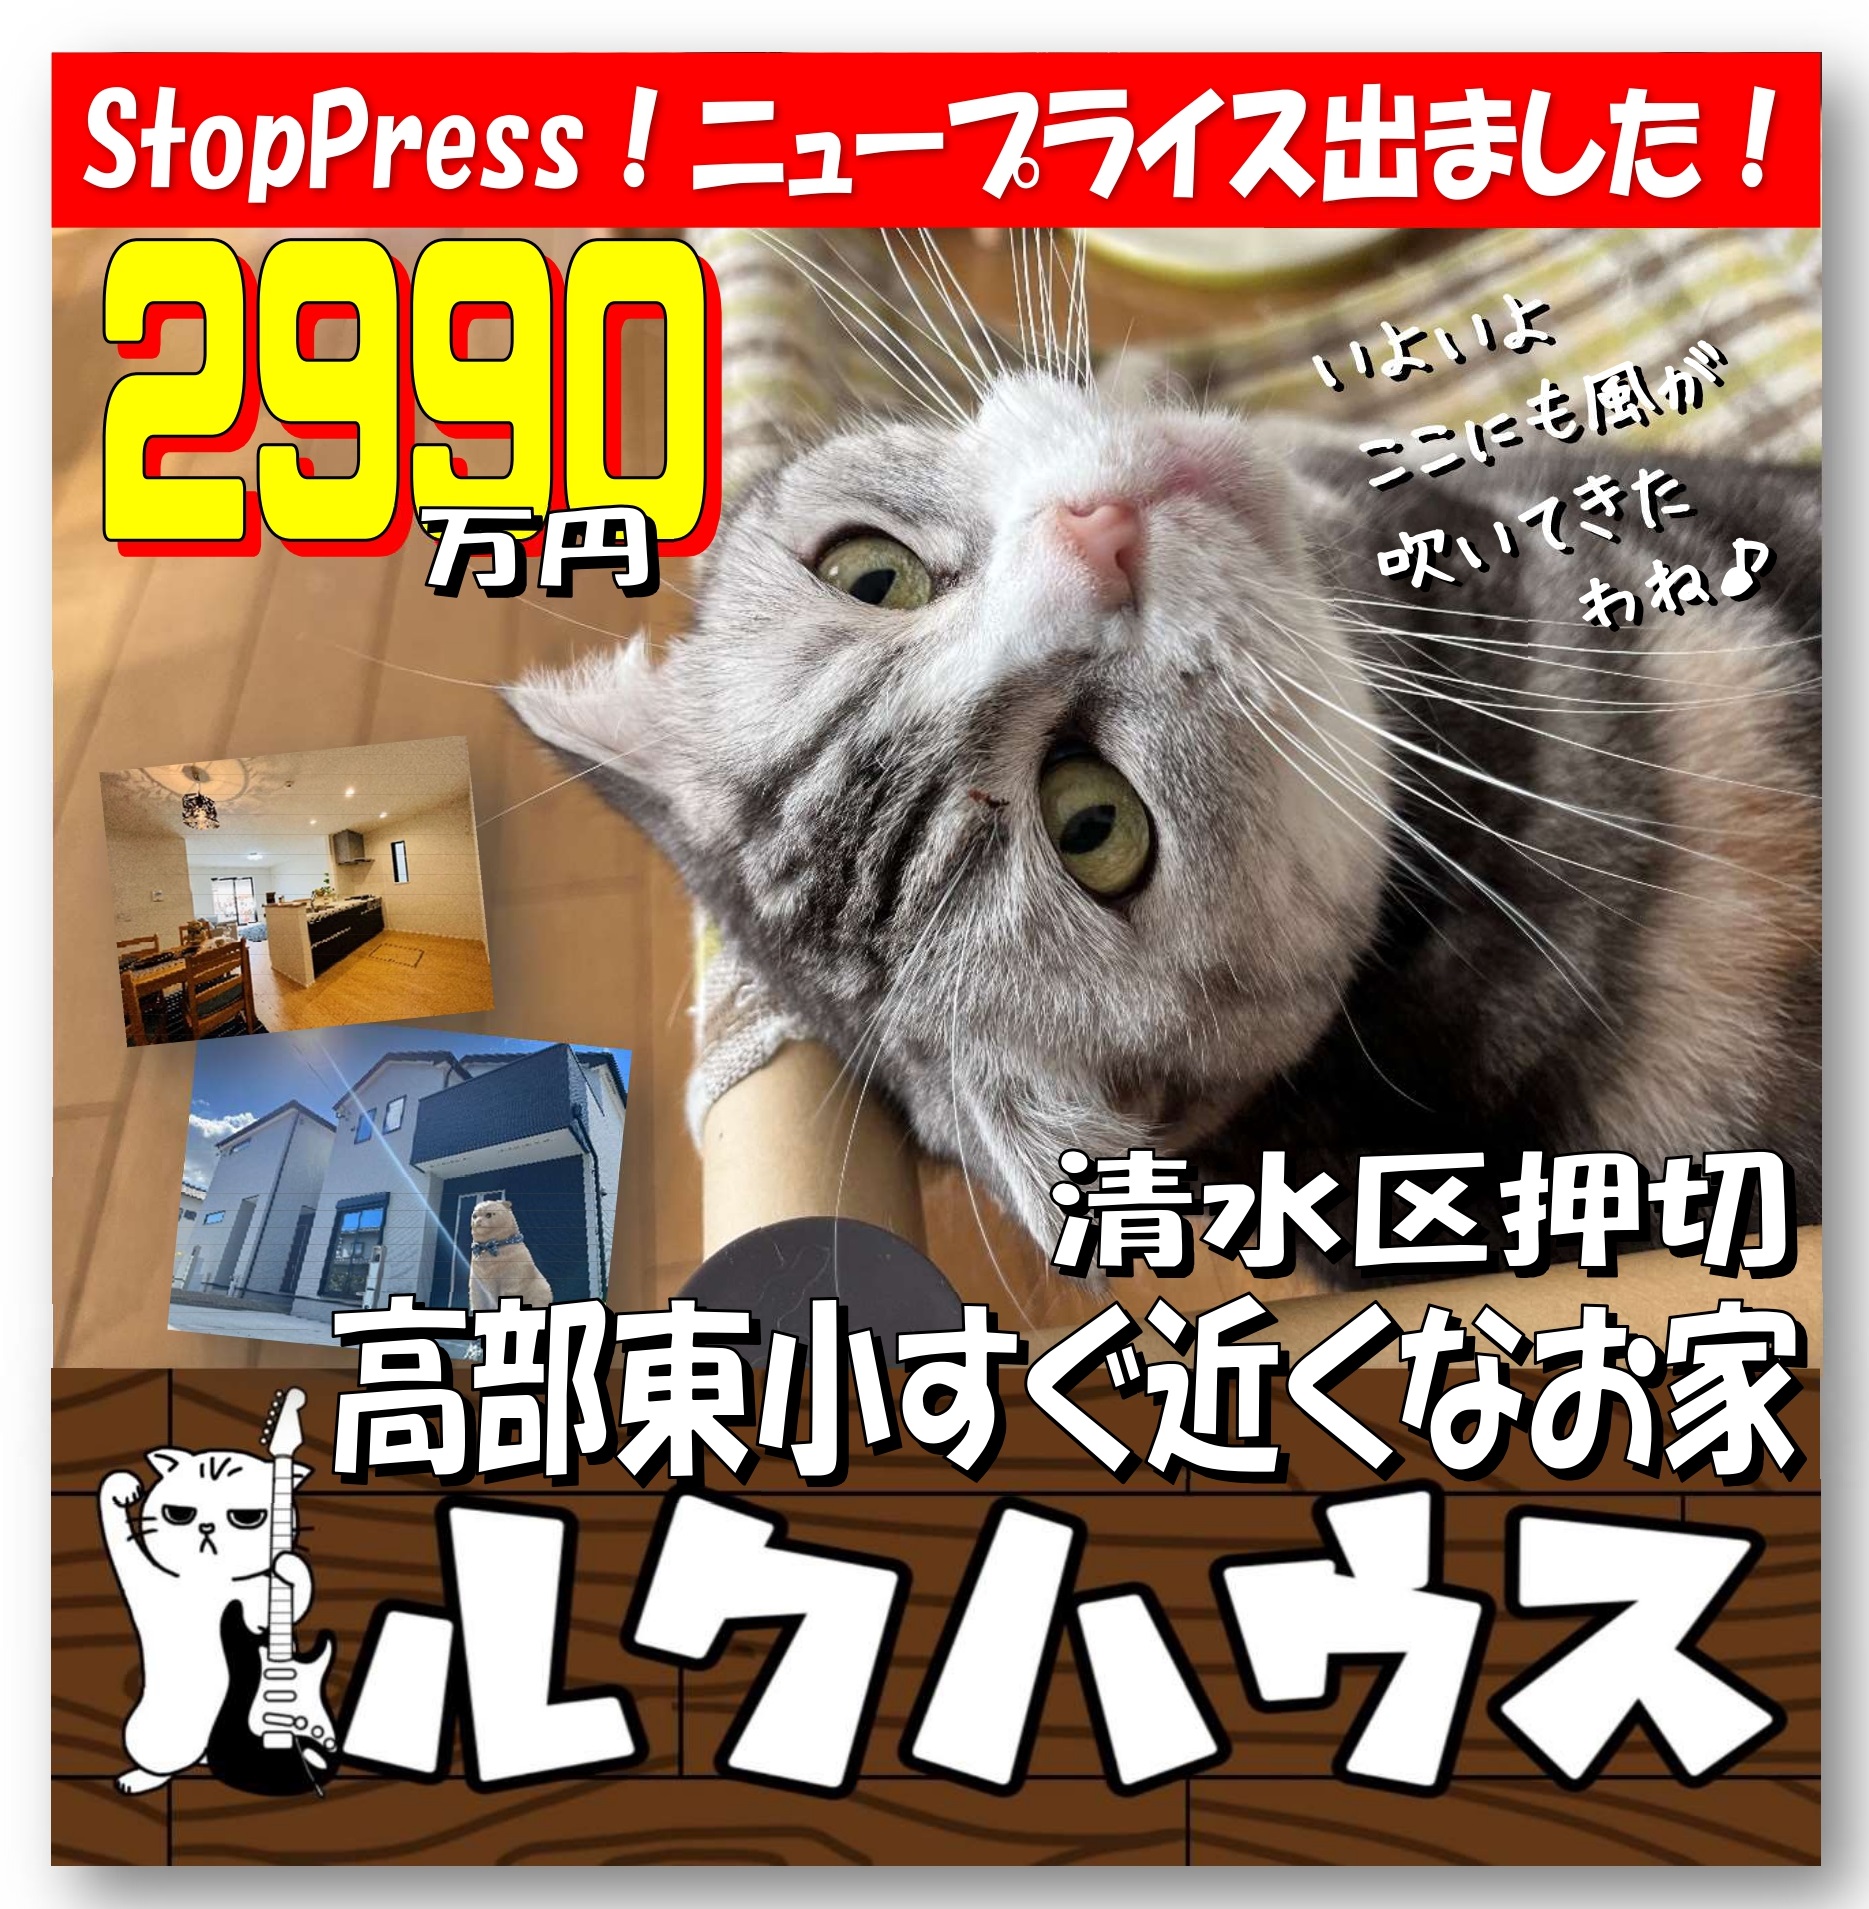 ■StopPress！ニュープライスは2990万円■　清水区押切・高部東小すぐ近くなお家